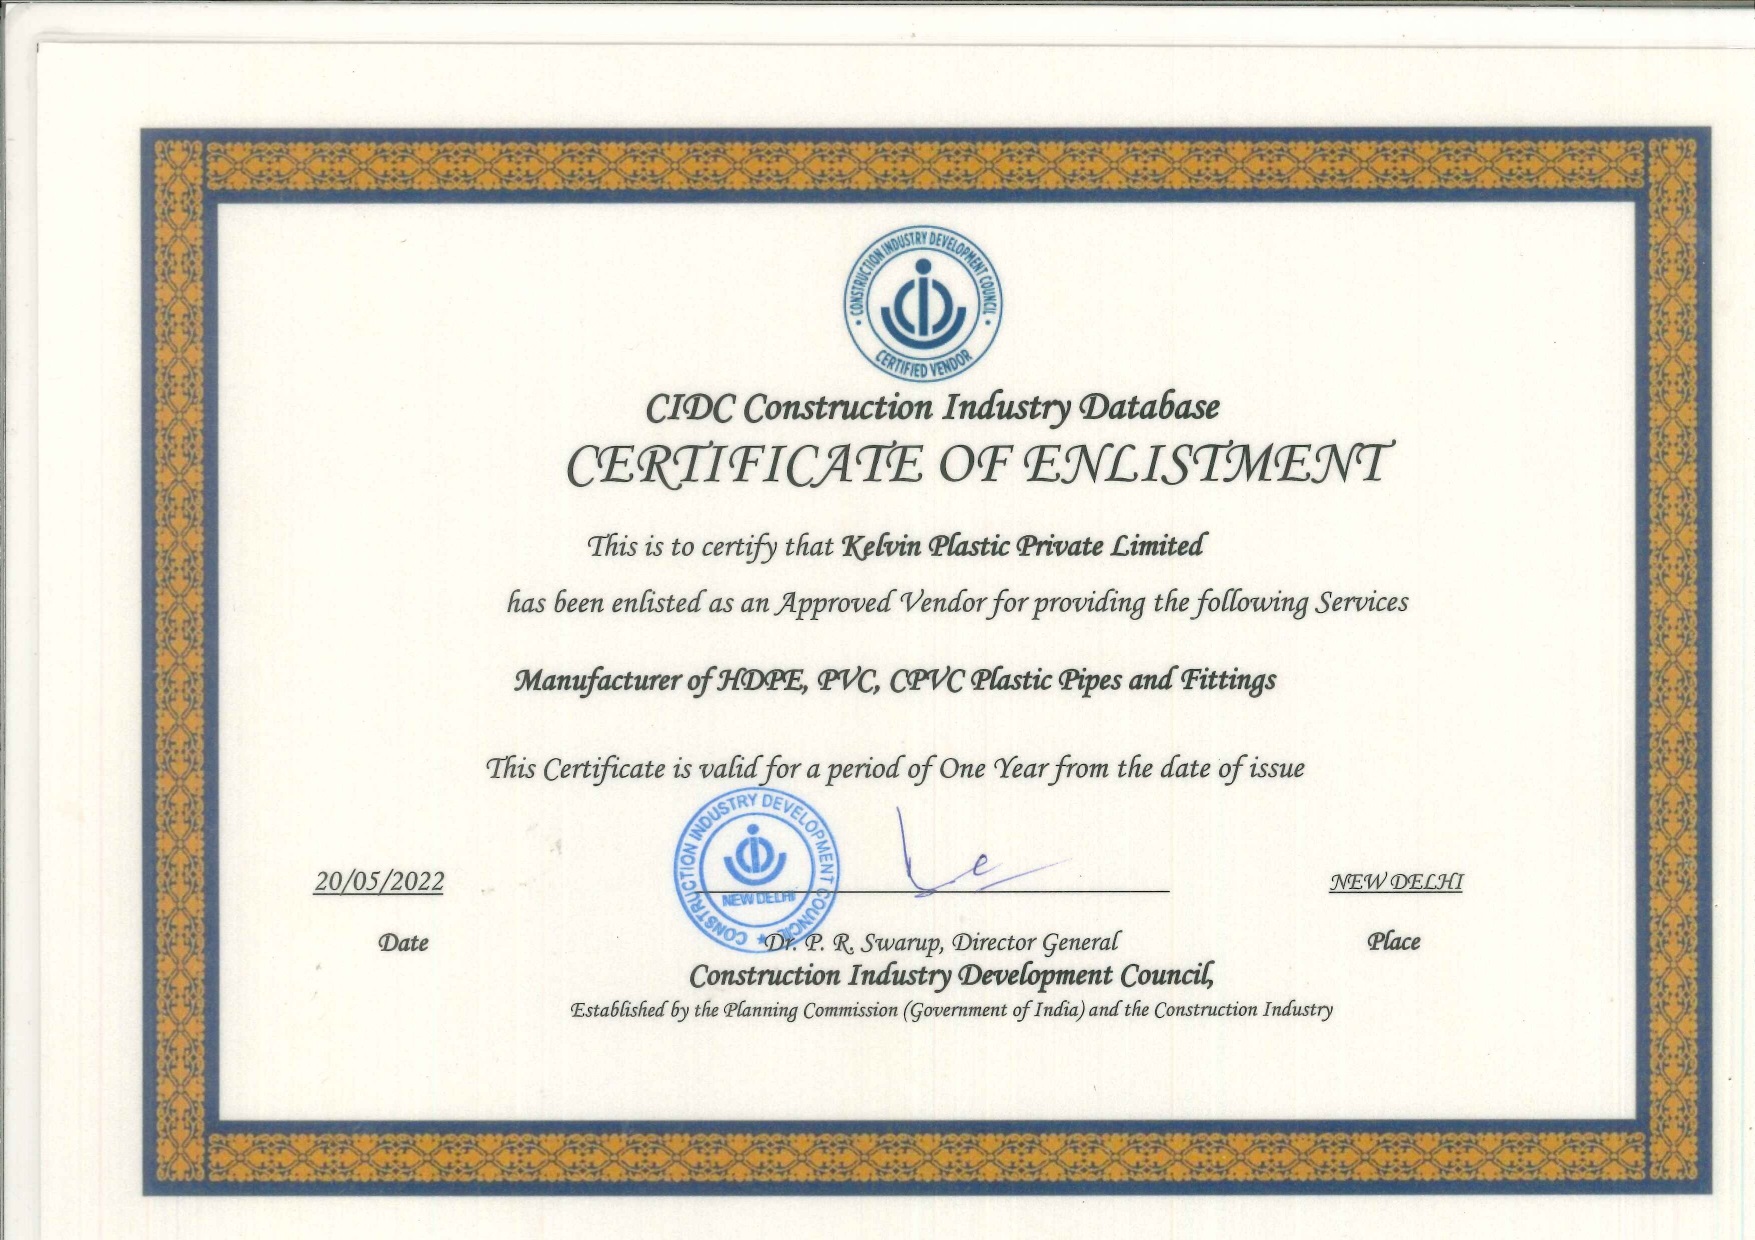 CIDC Certificate with Signature